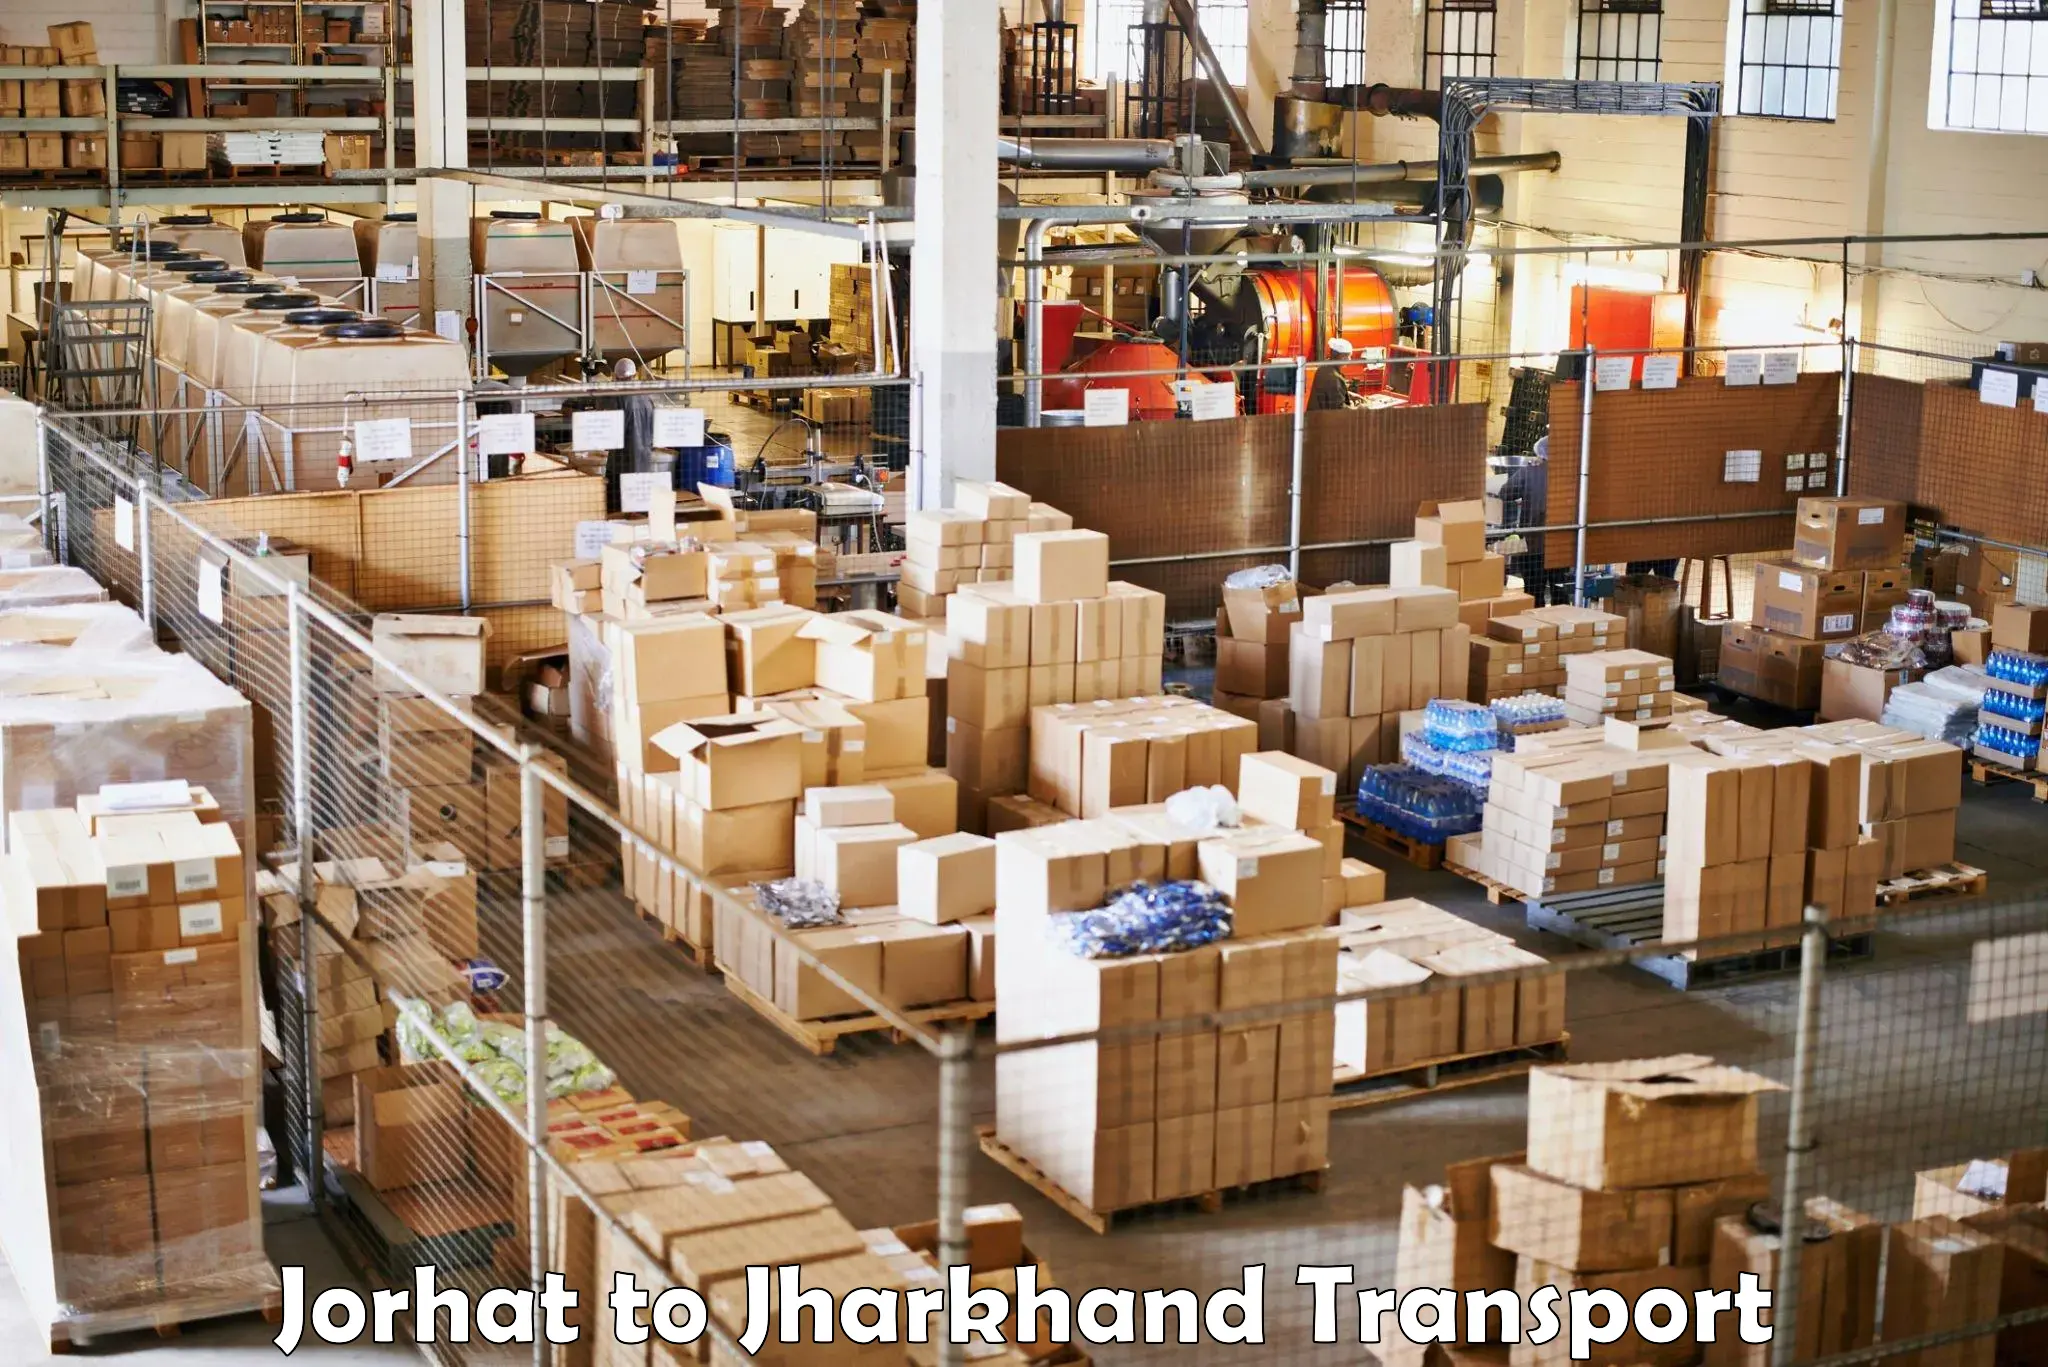 Truck transport companies in India Jorhat to Bokaro